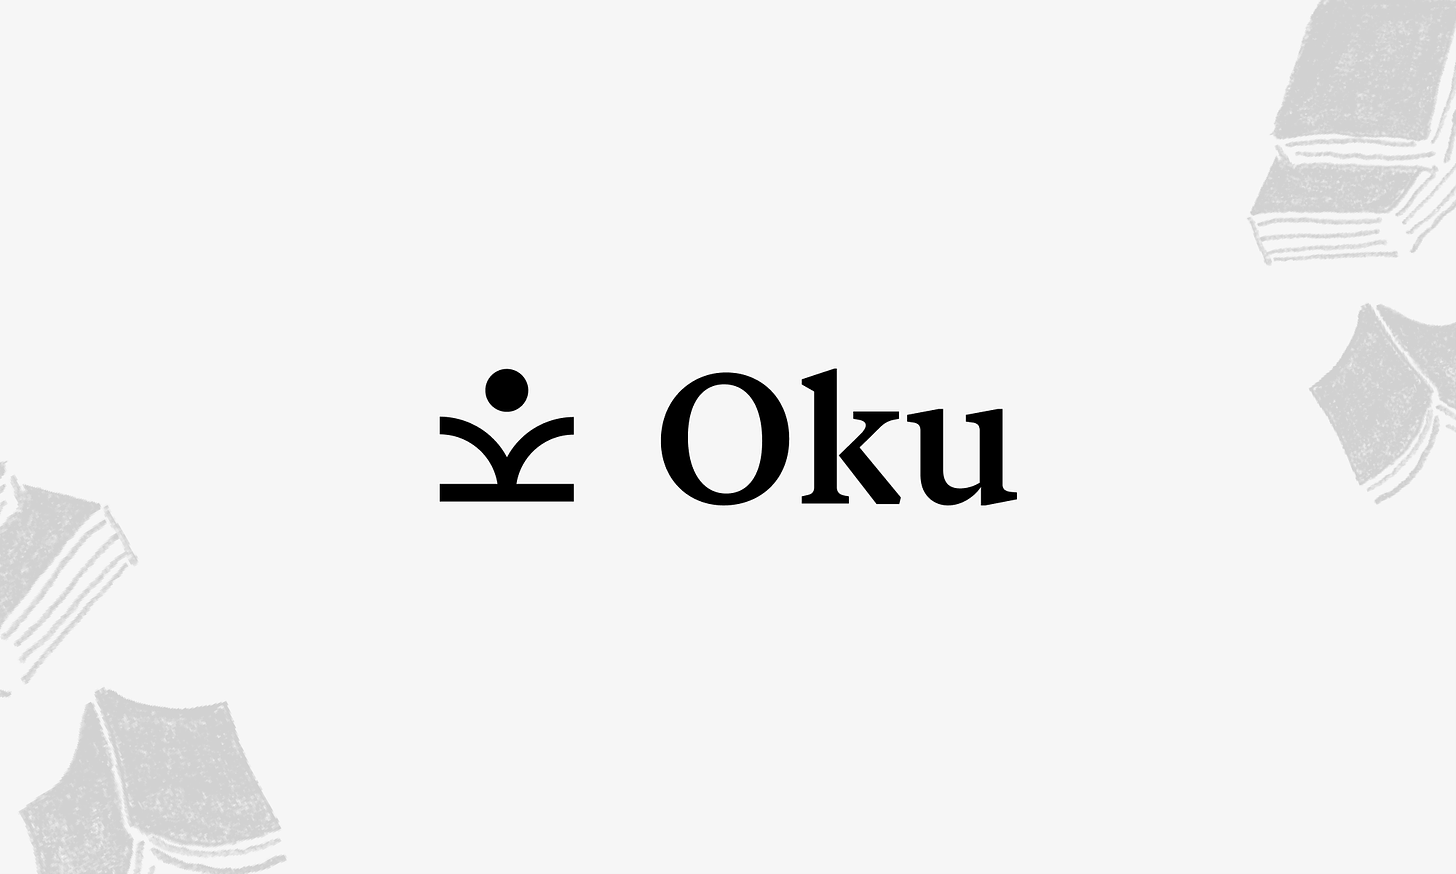 Oku – our new name and logo